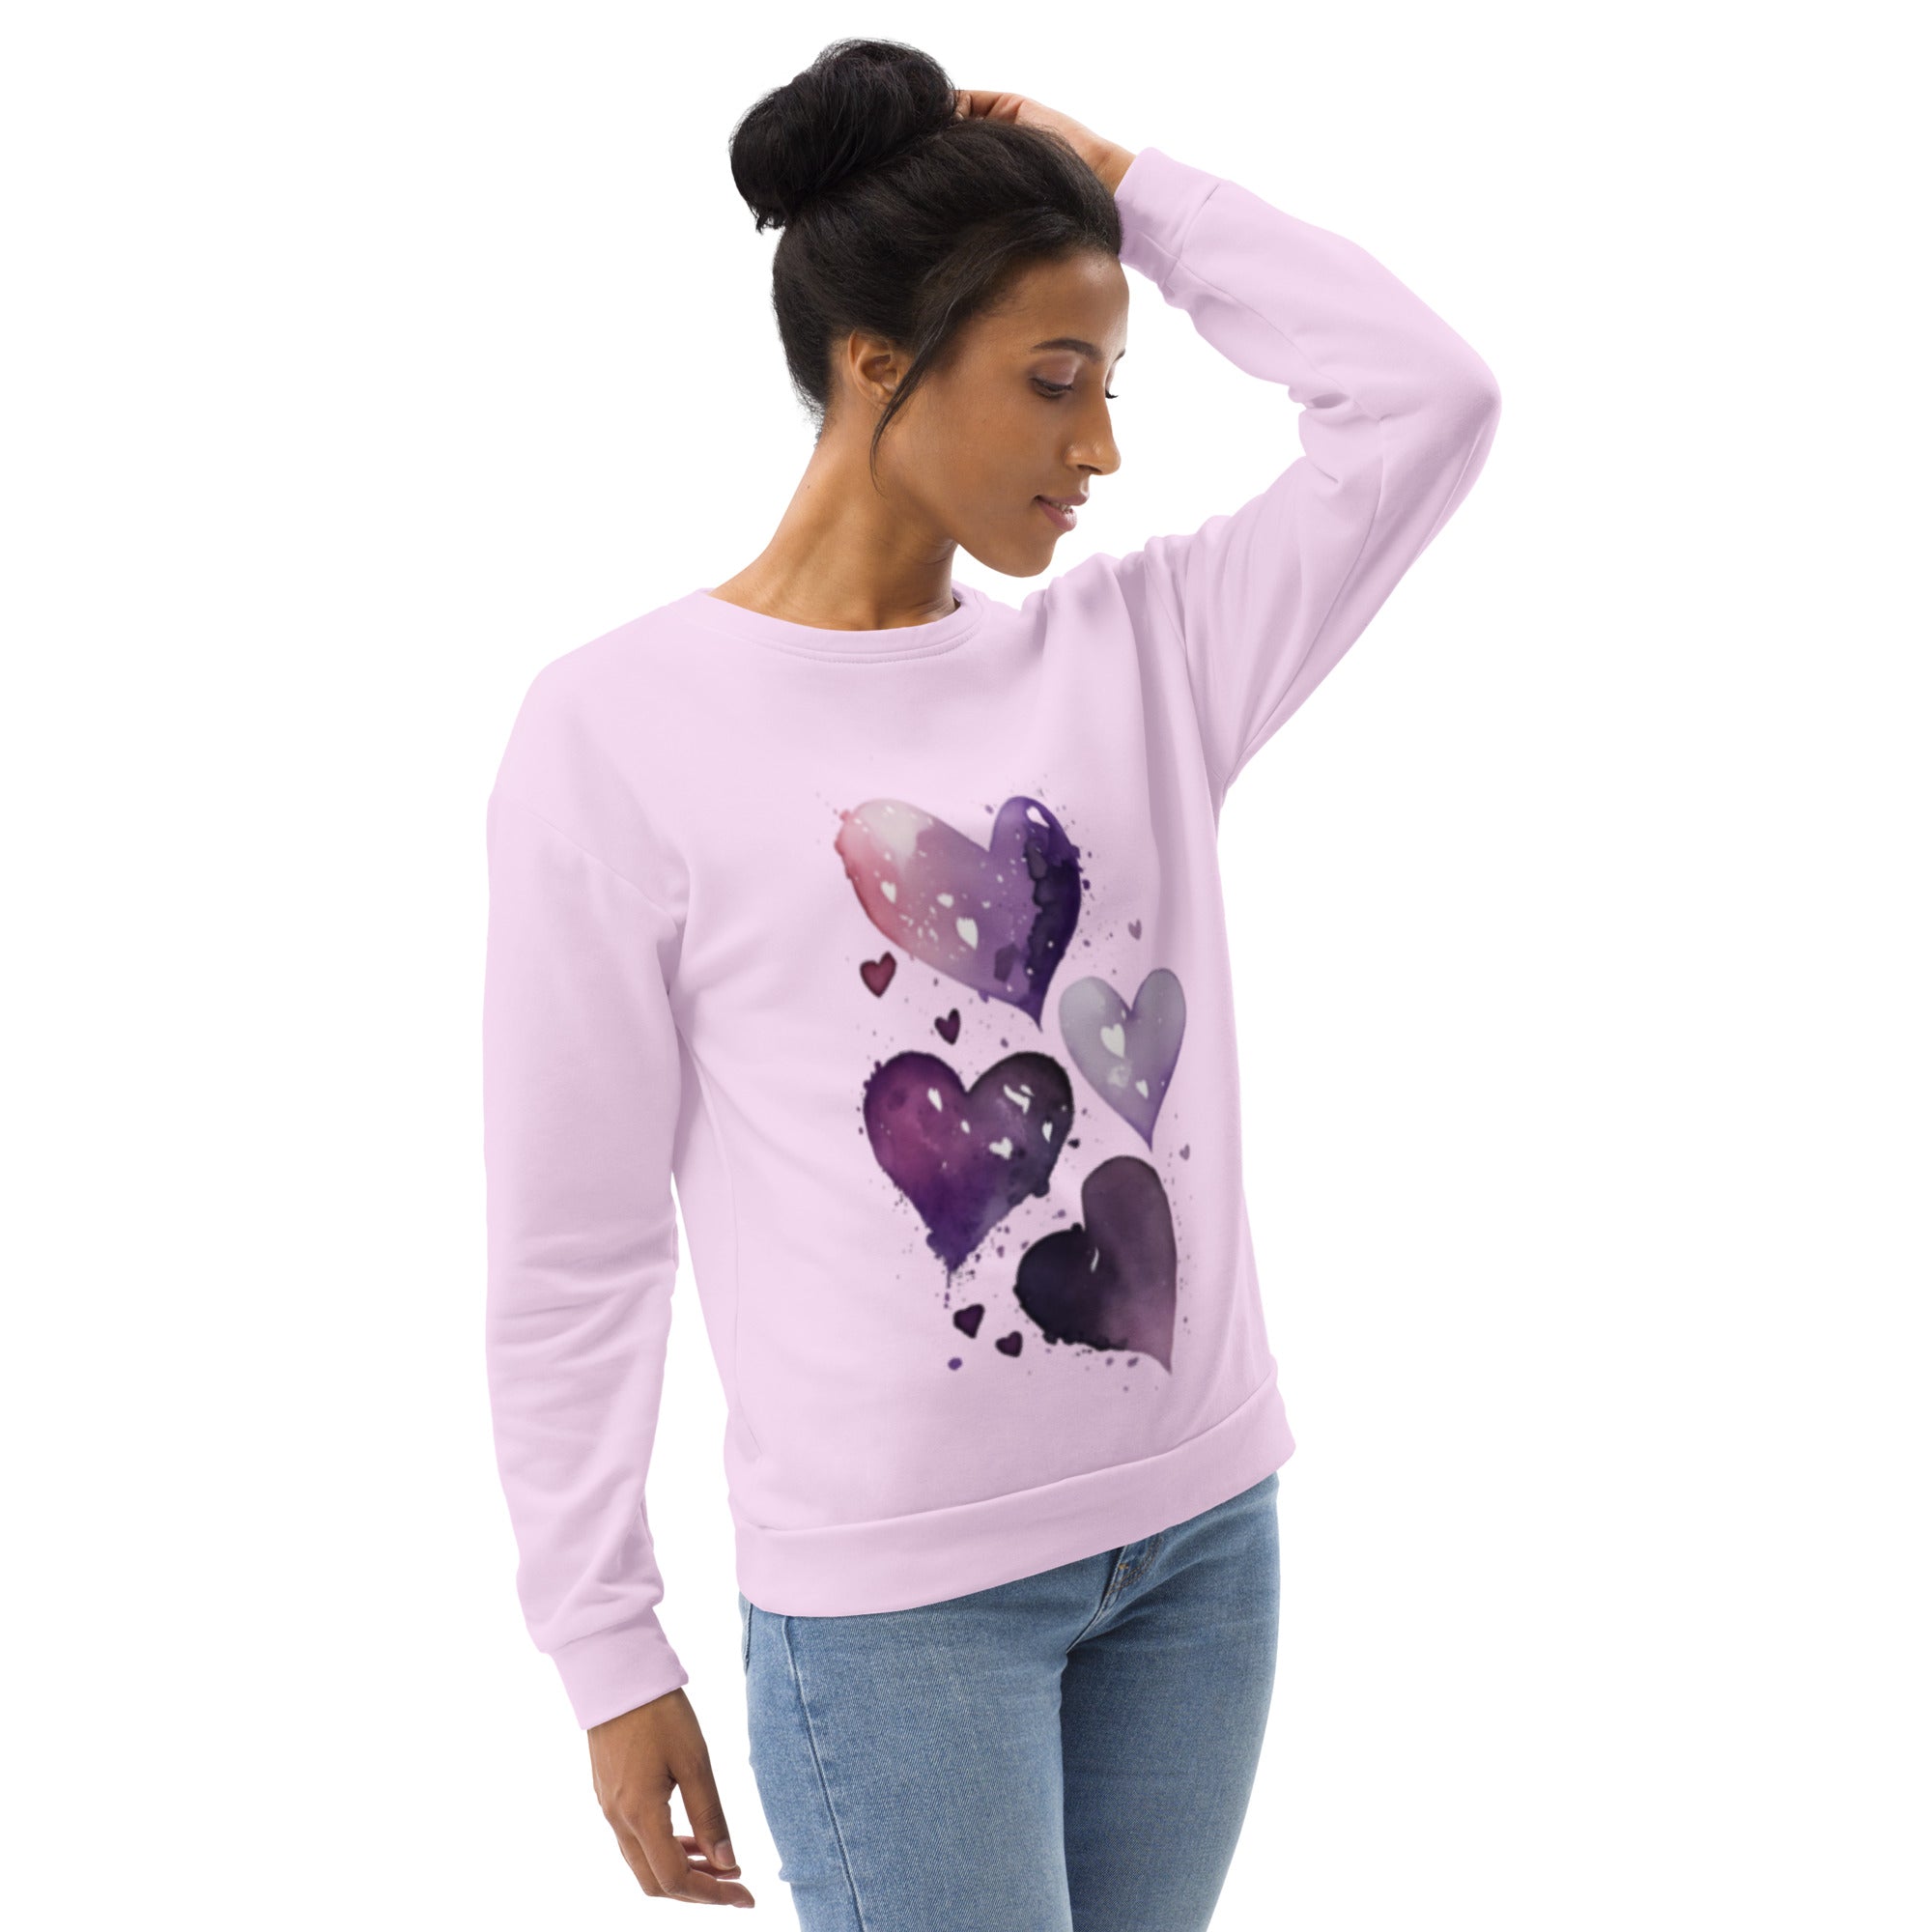 Candy Hearts Women's Sweatshirt